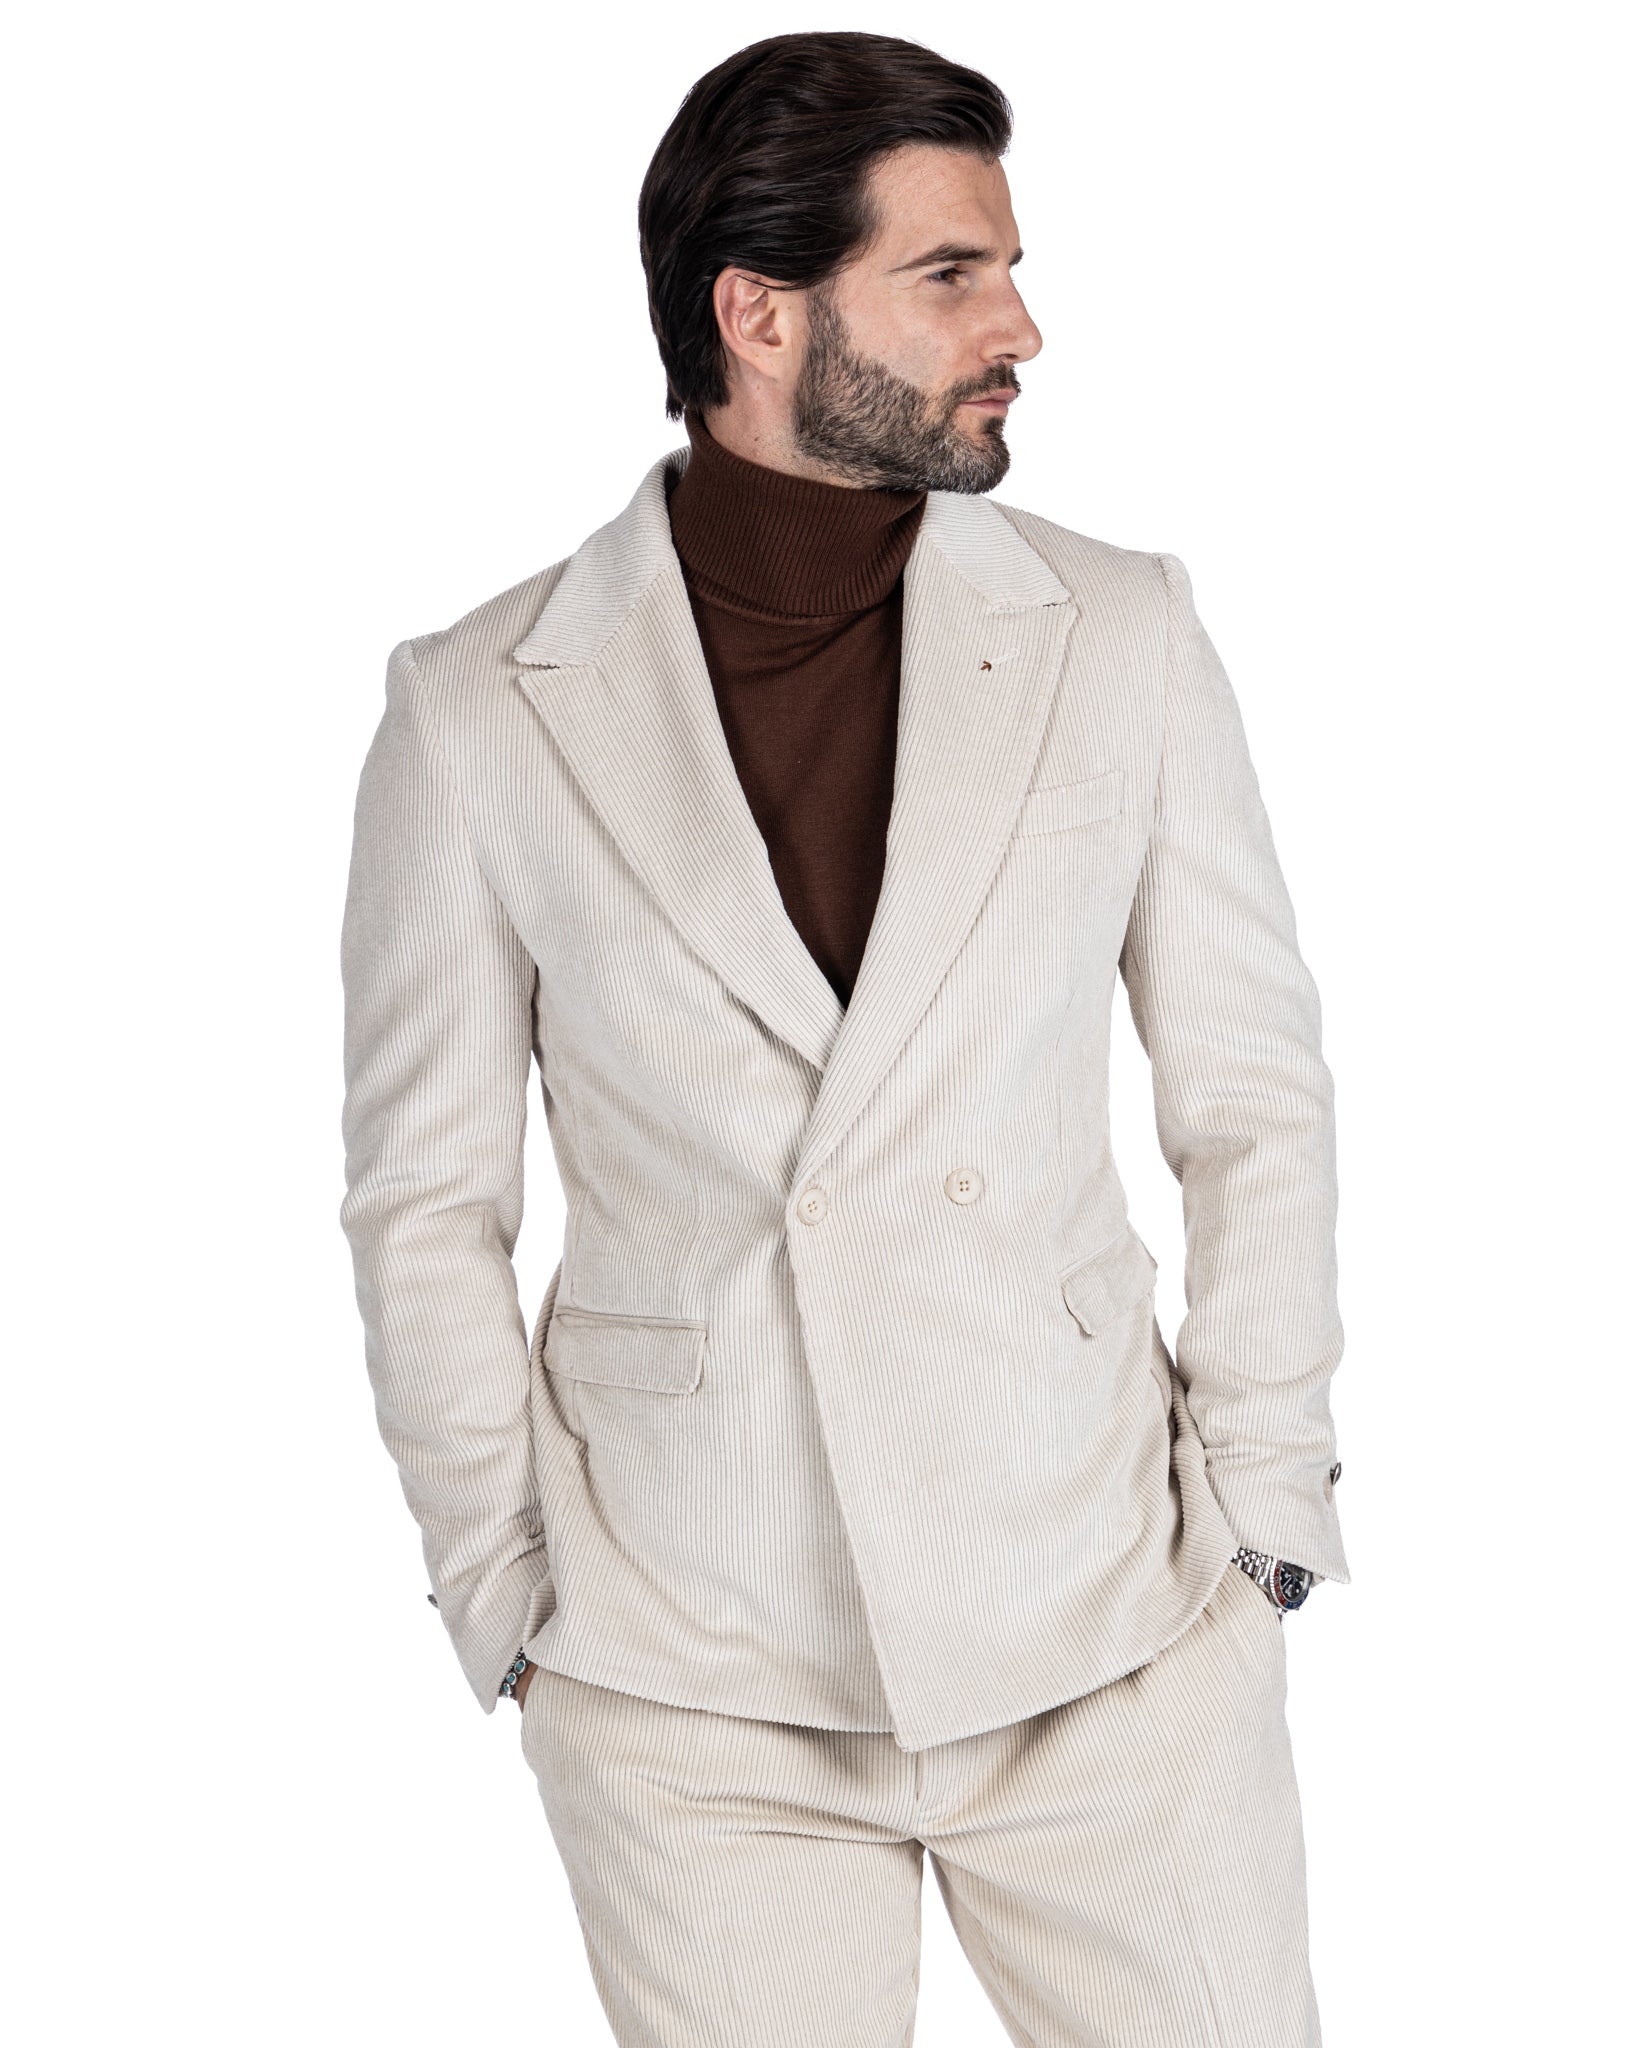 Mads - two-button cream velvet jacket